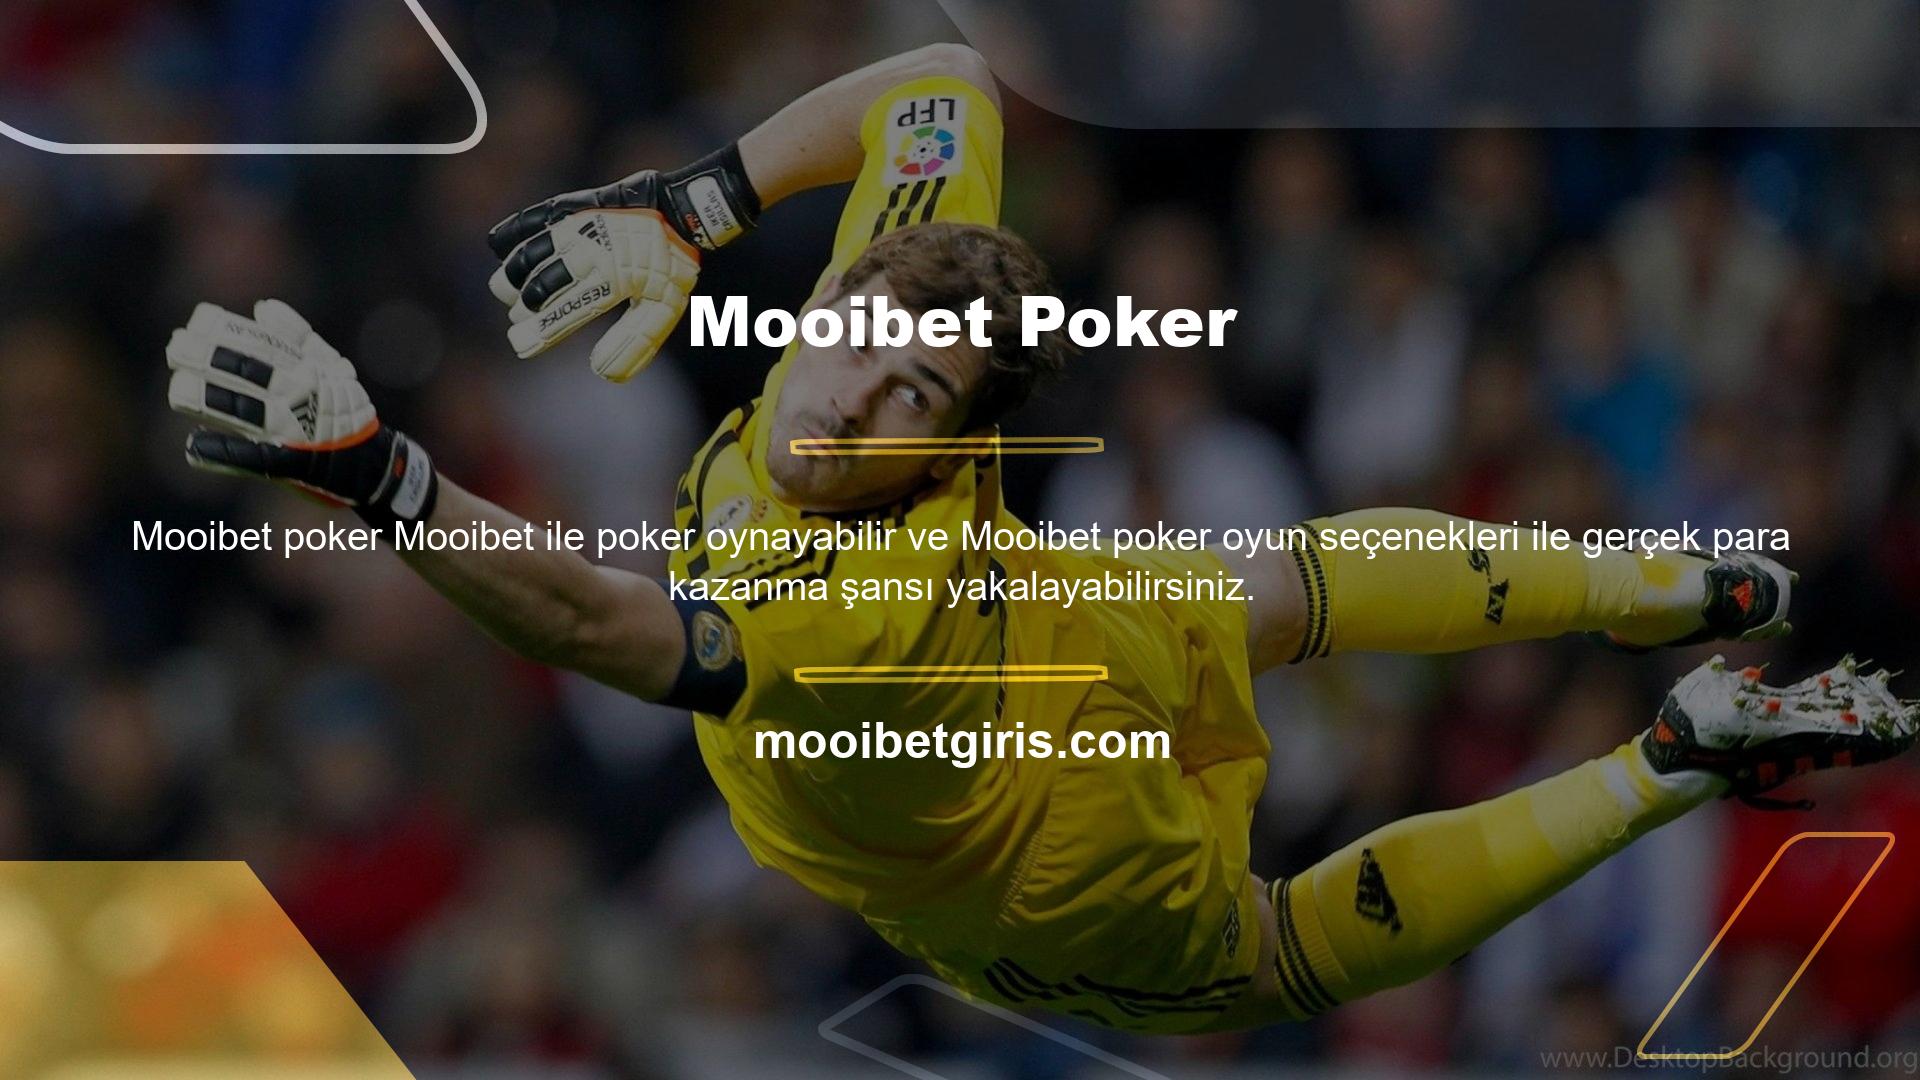 Mooibet Poker